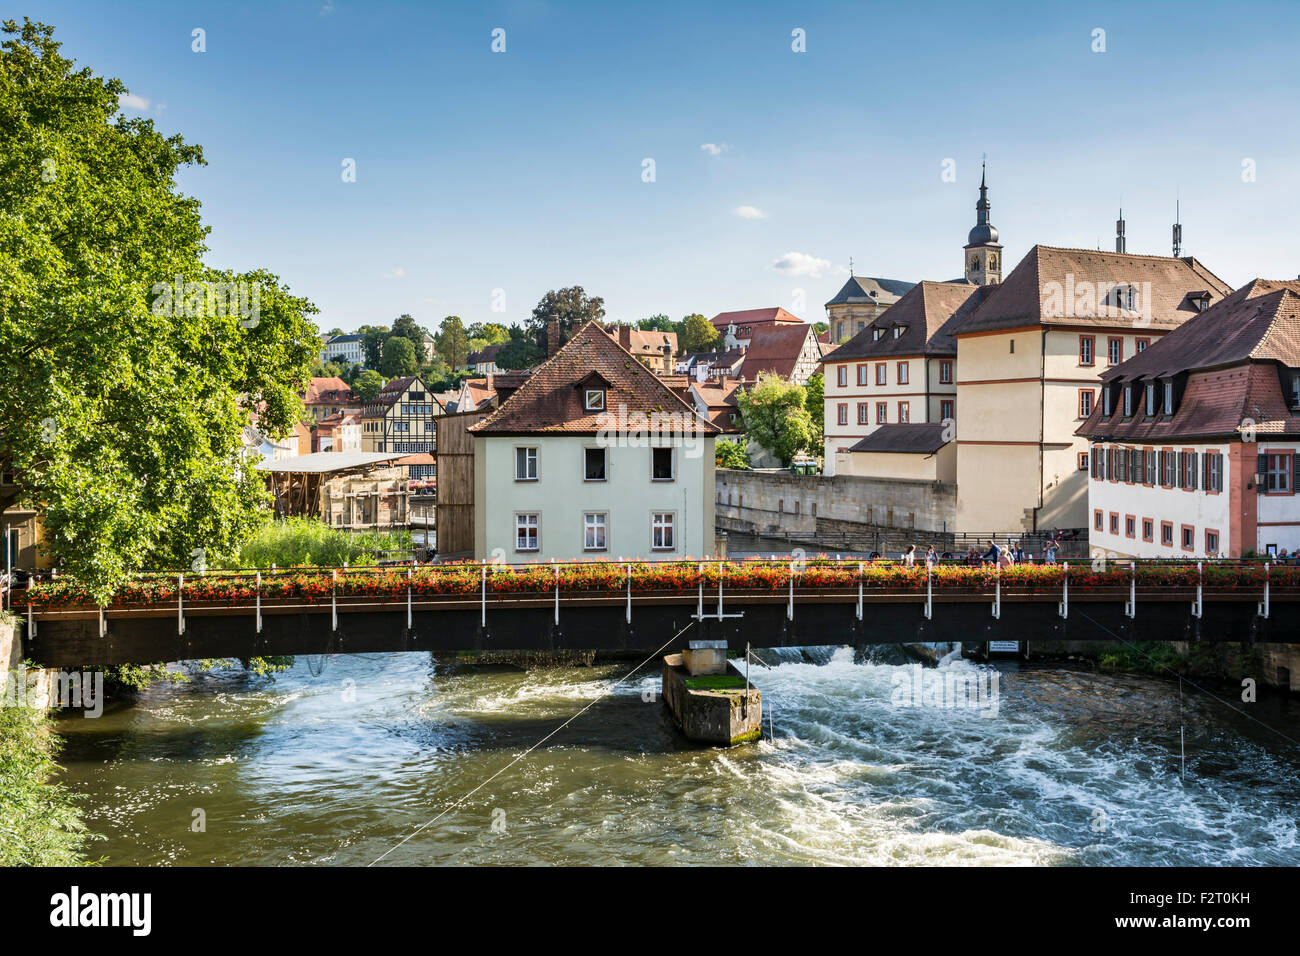 BAMBERG, GERMANY - SEPTEMBER 4: Tourists on a bridge over the river Regnitz in Bamberg, Germany on September 4, 2015. Stock Photo